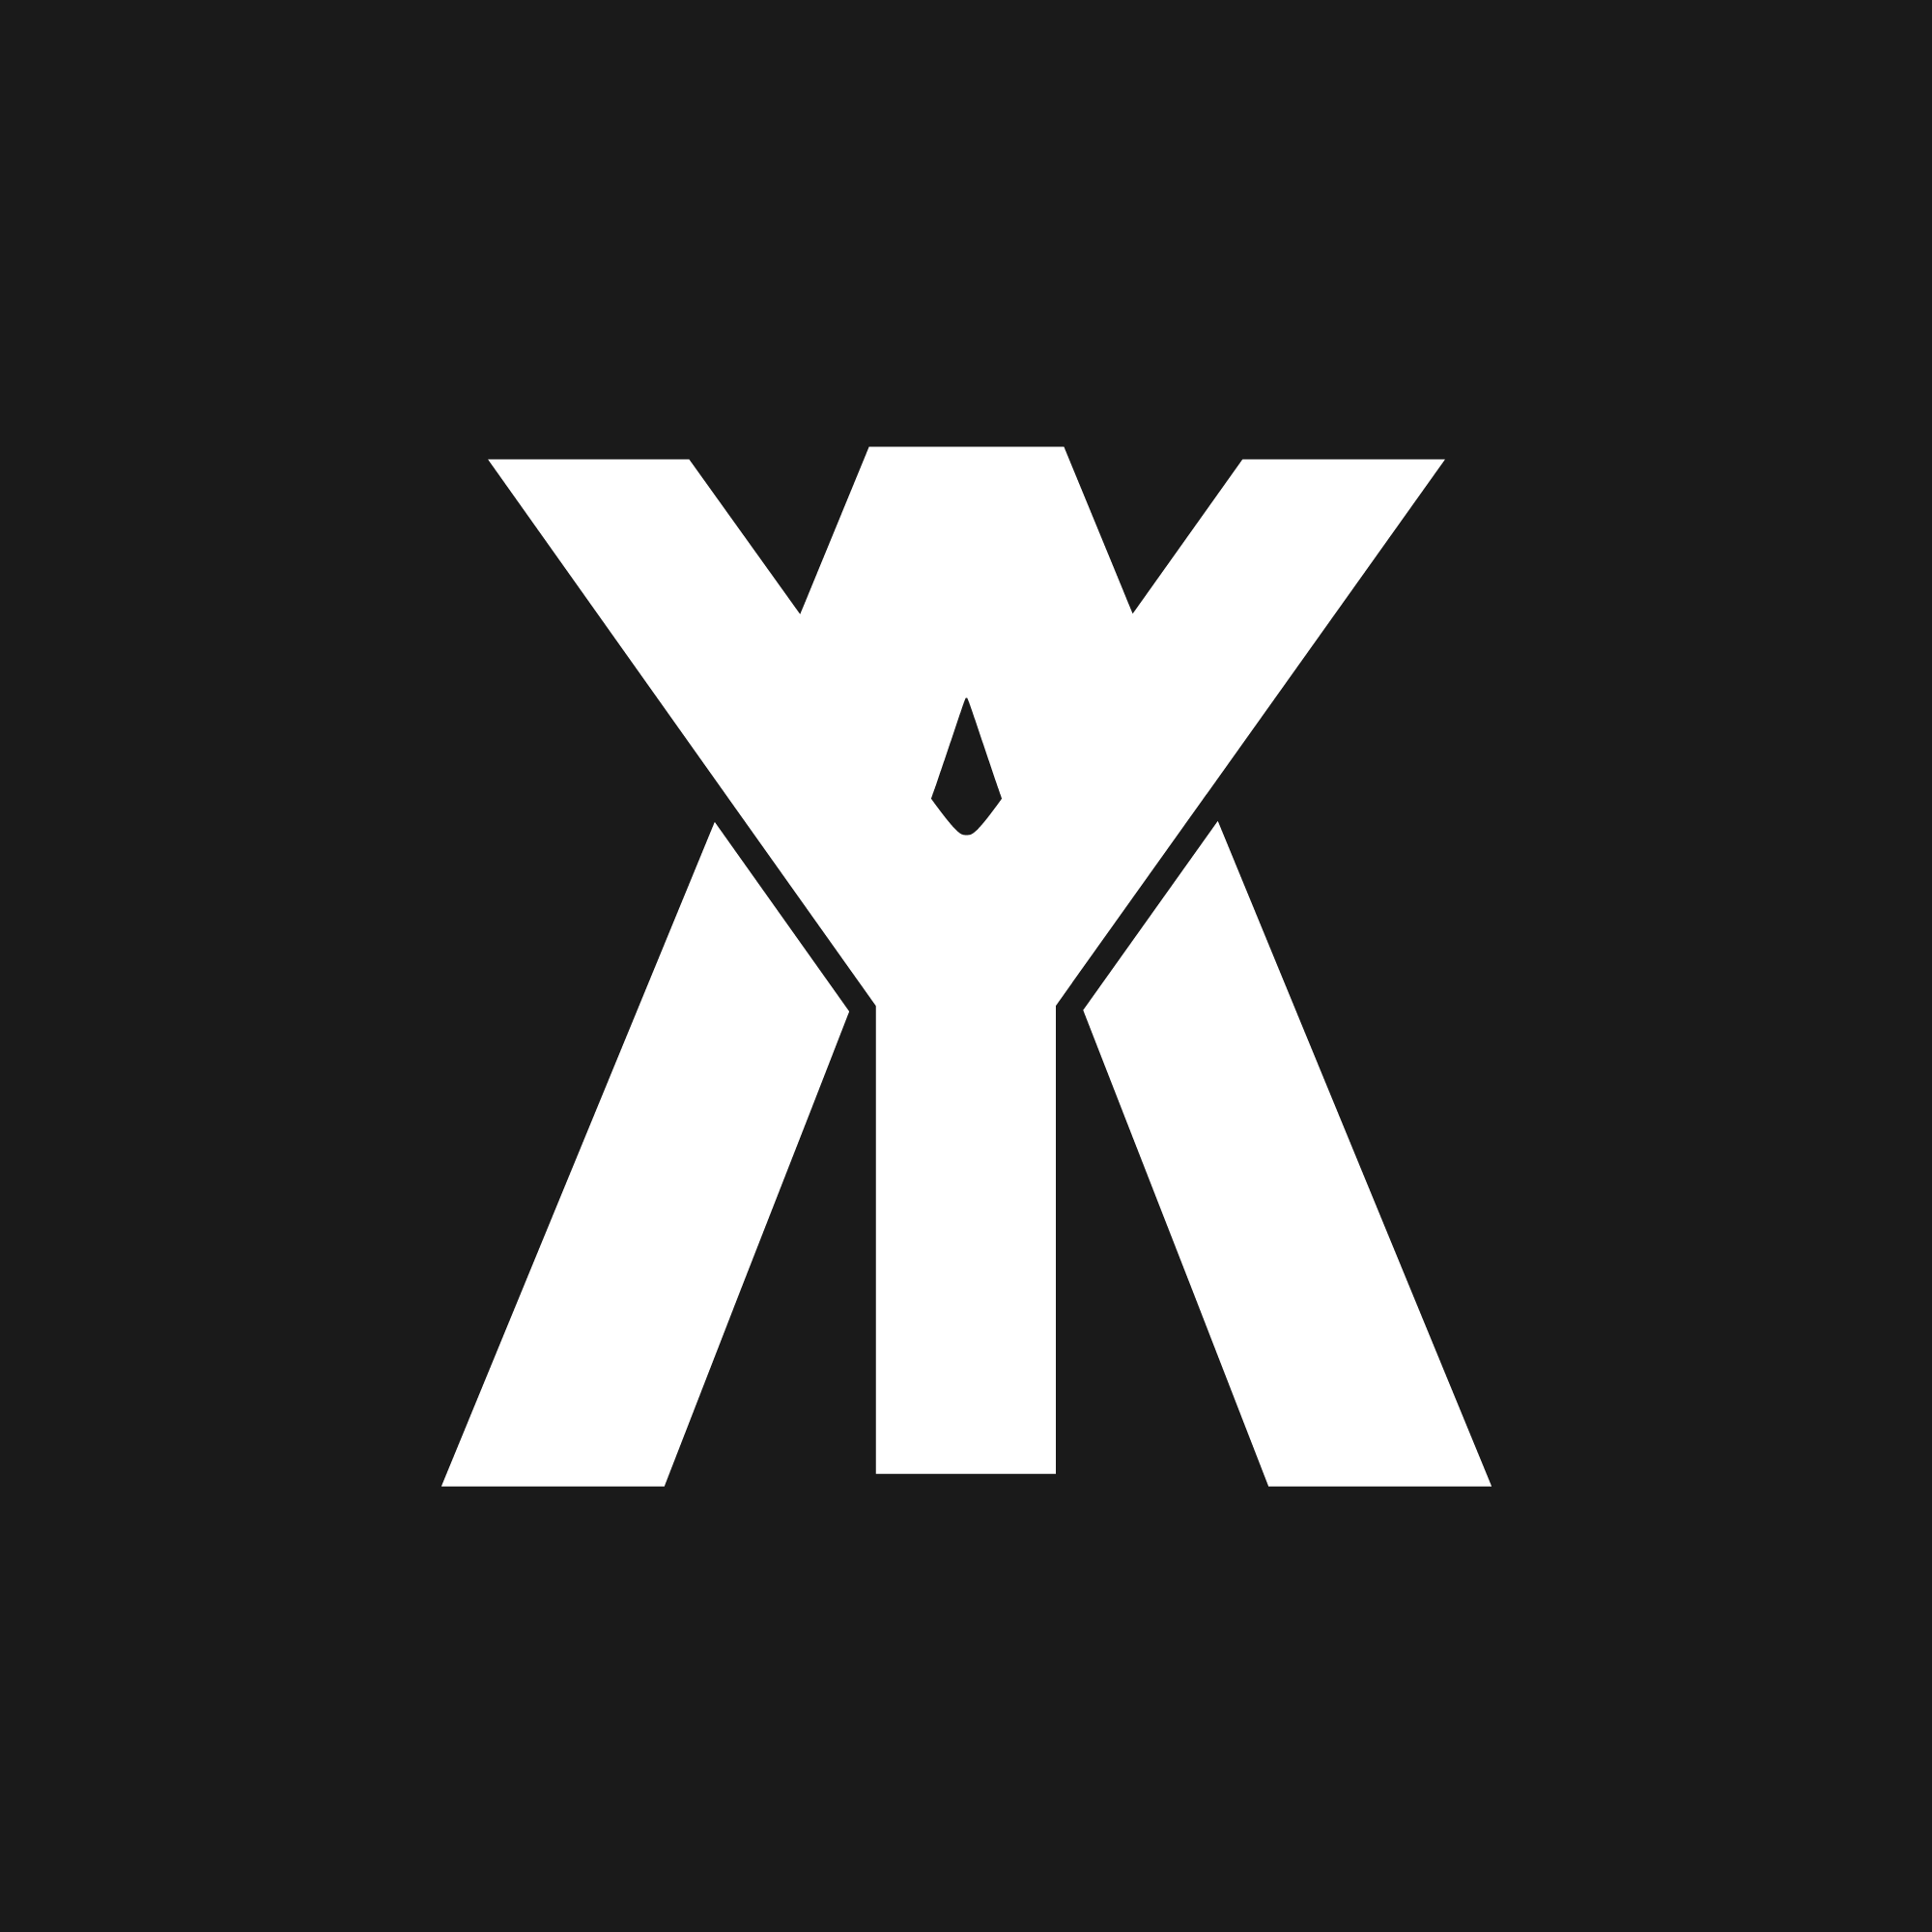 Ya Logo - YA. Logo Design for Soloprenuers and Startups